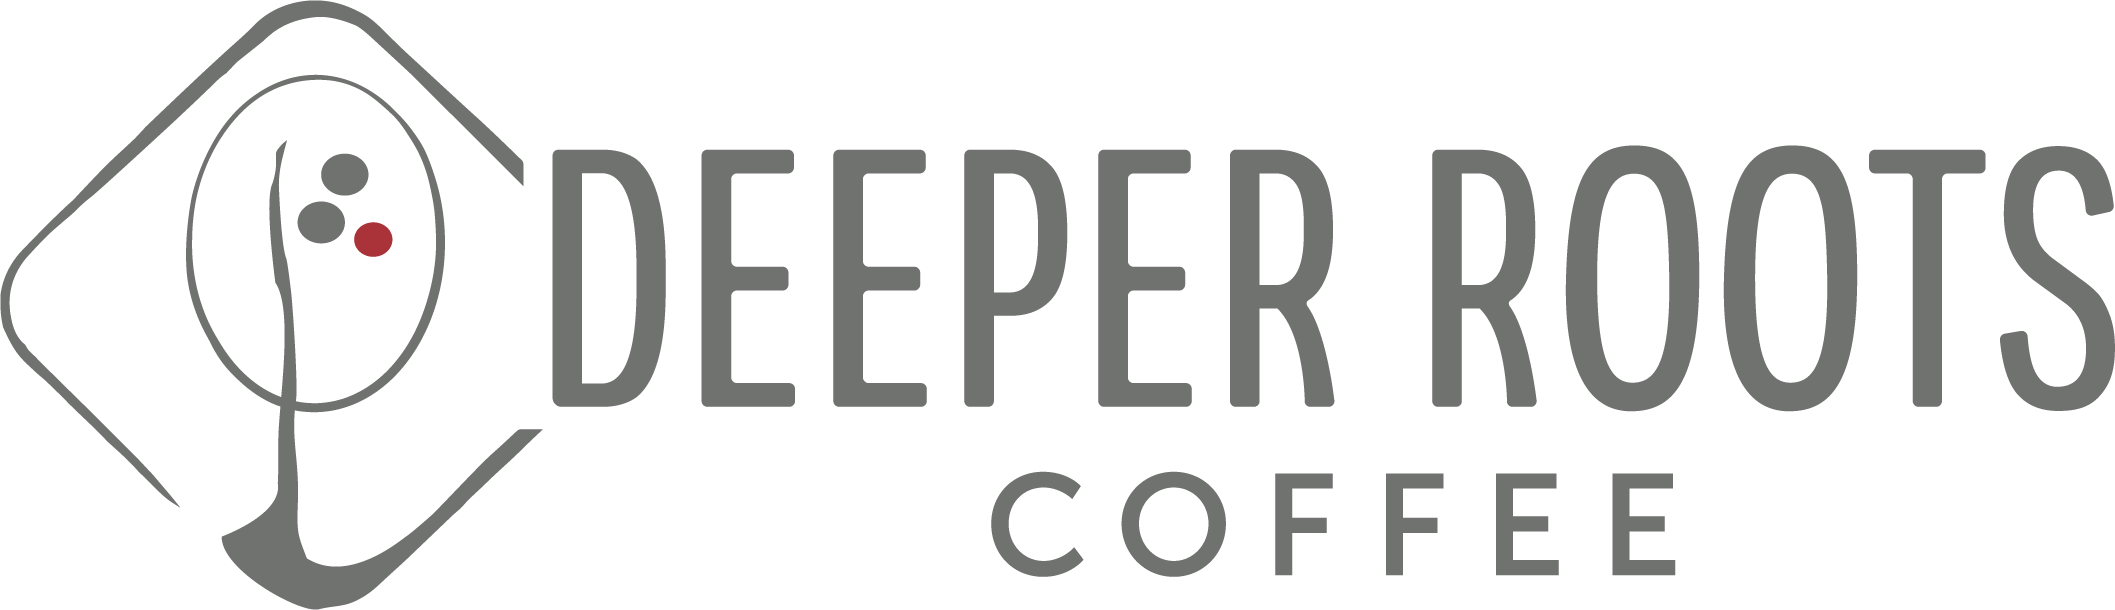 Deeper Roots Coffee